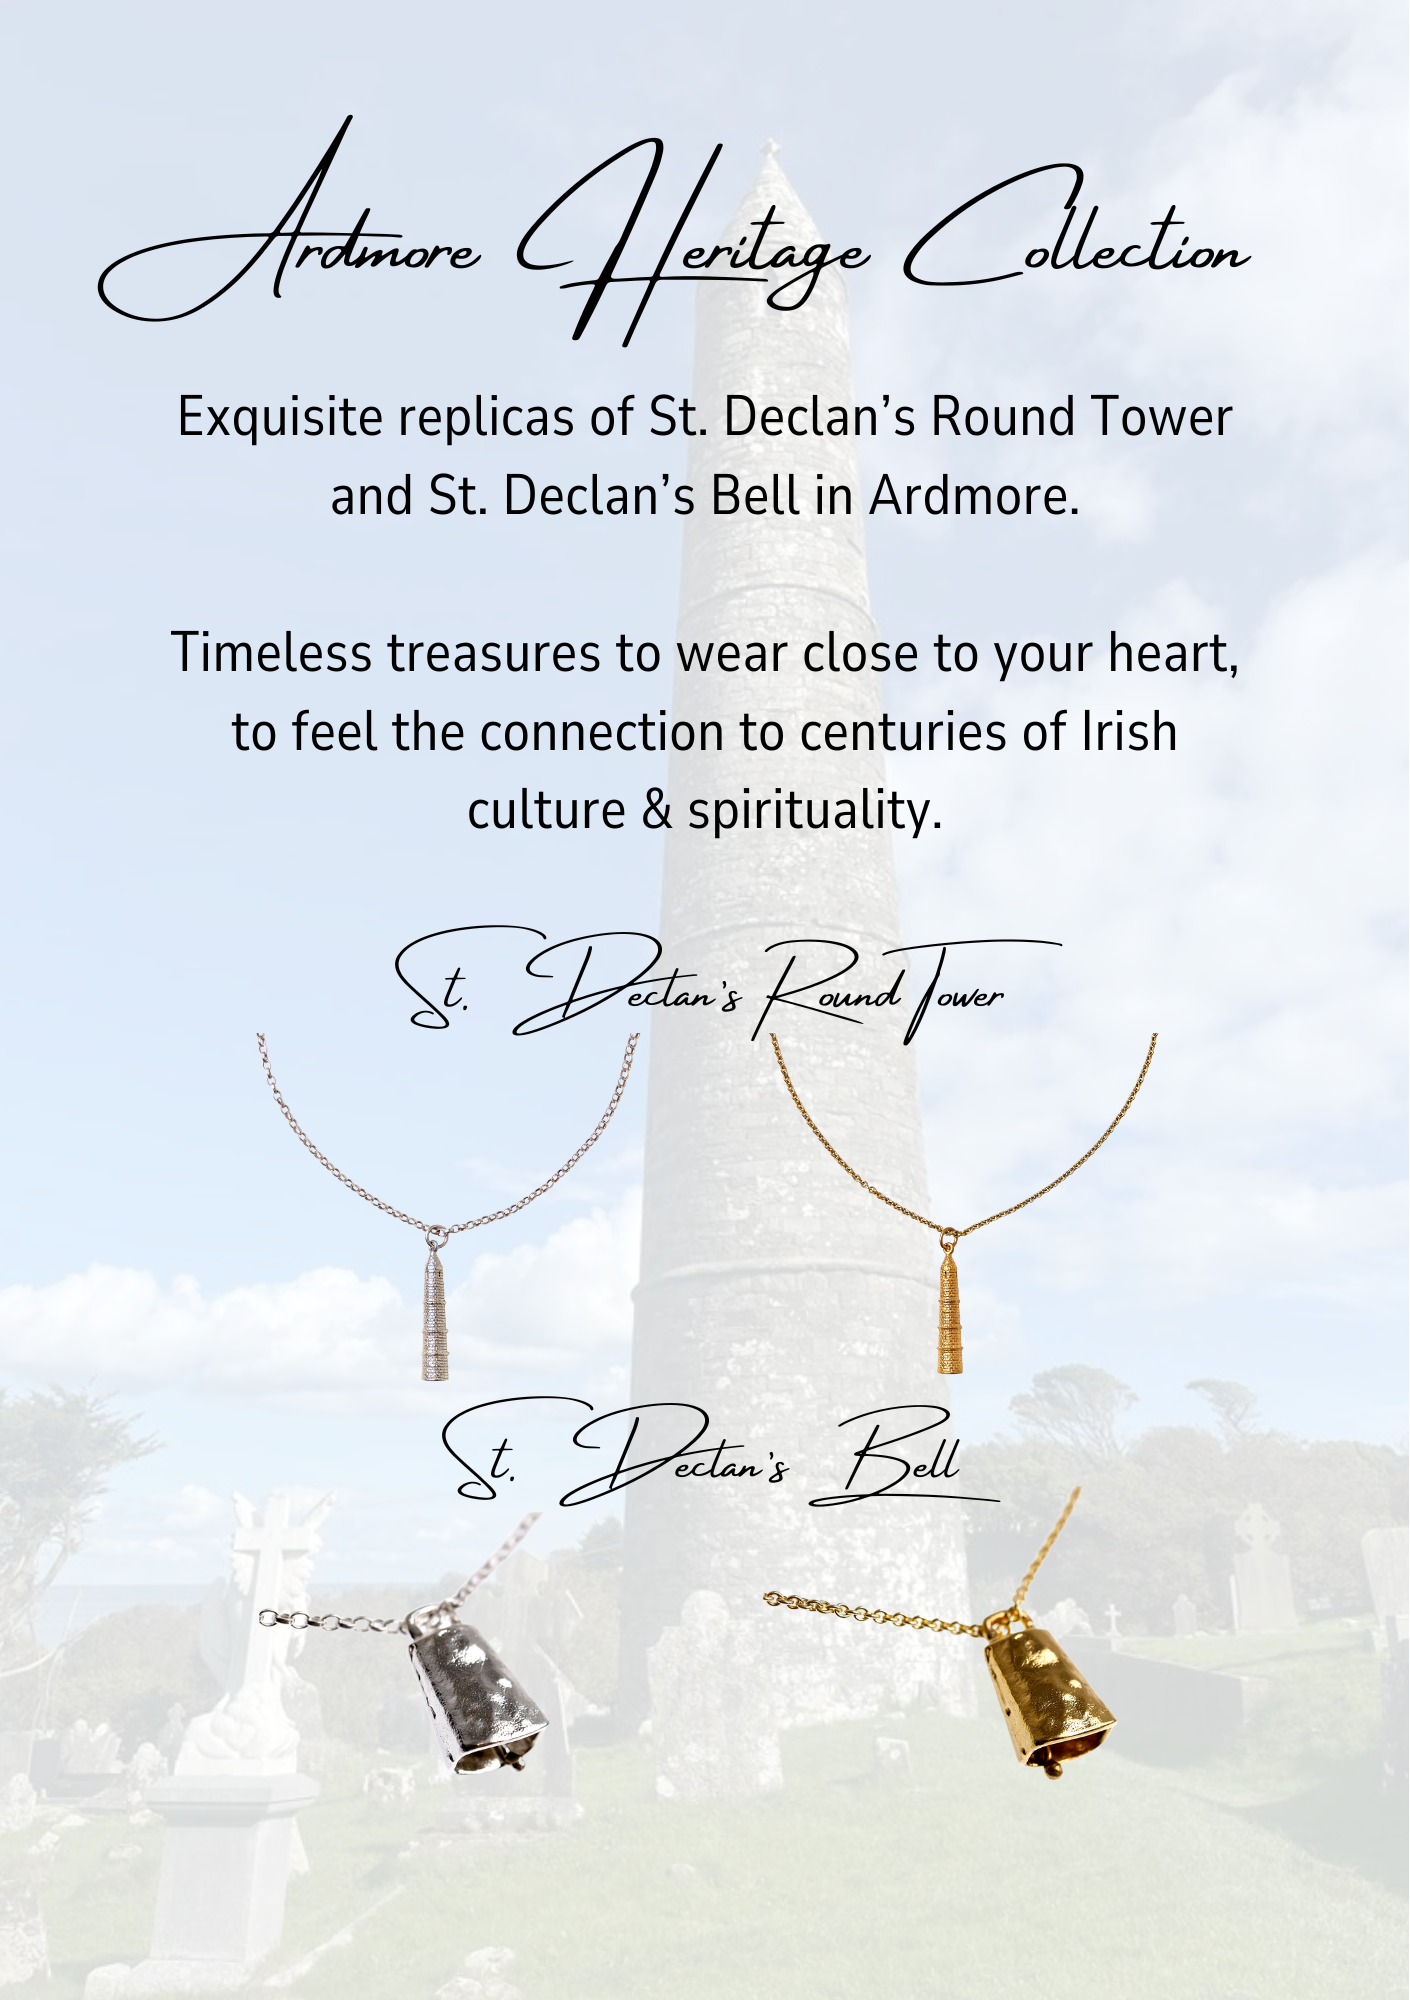 St Declan's Bell